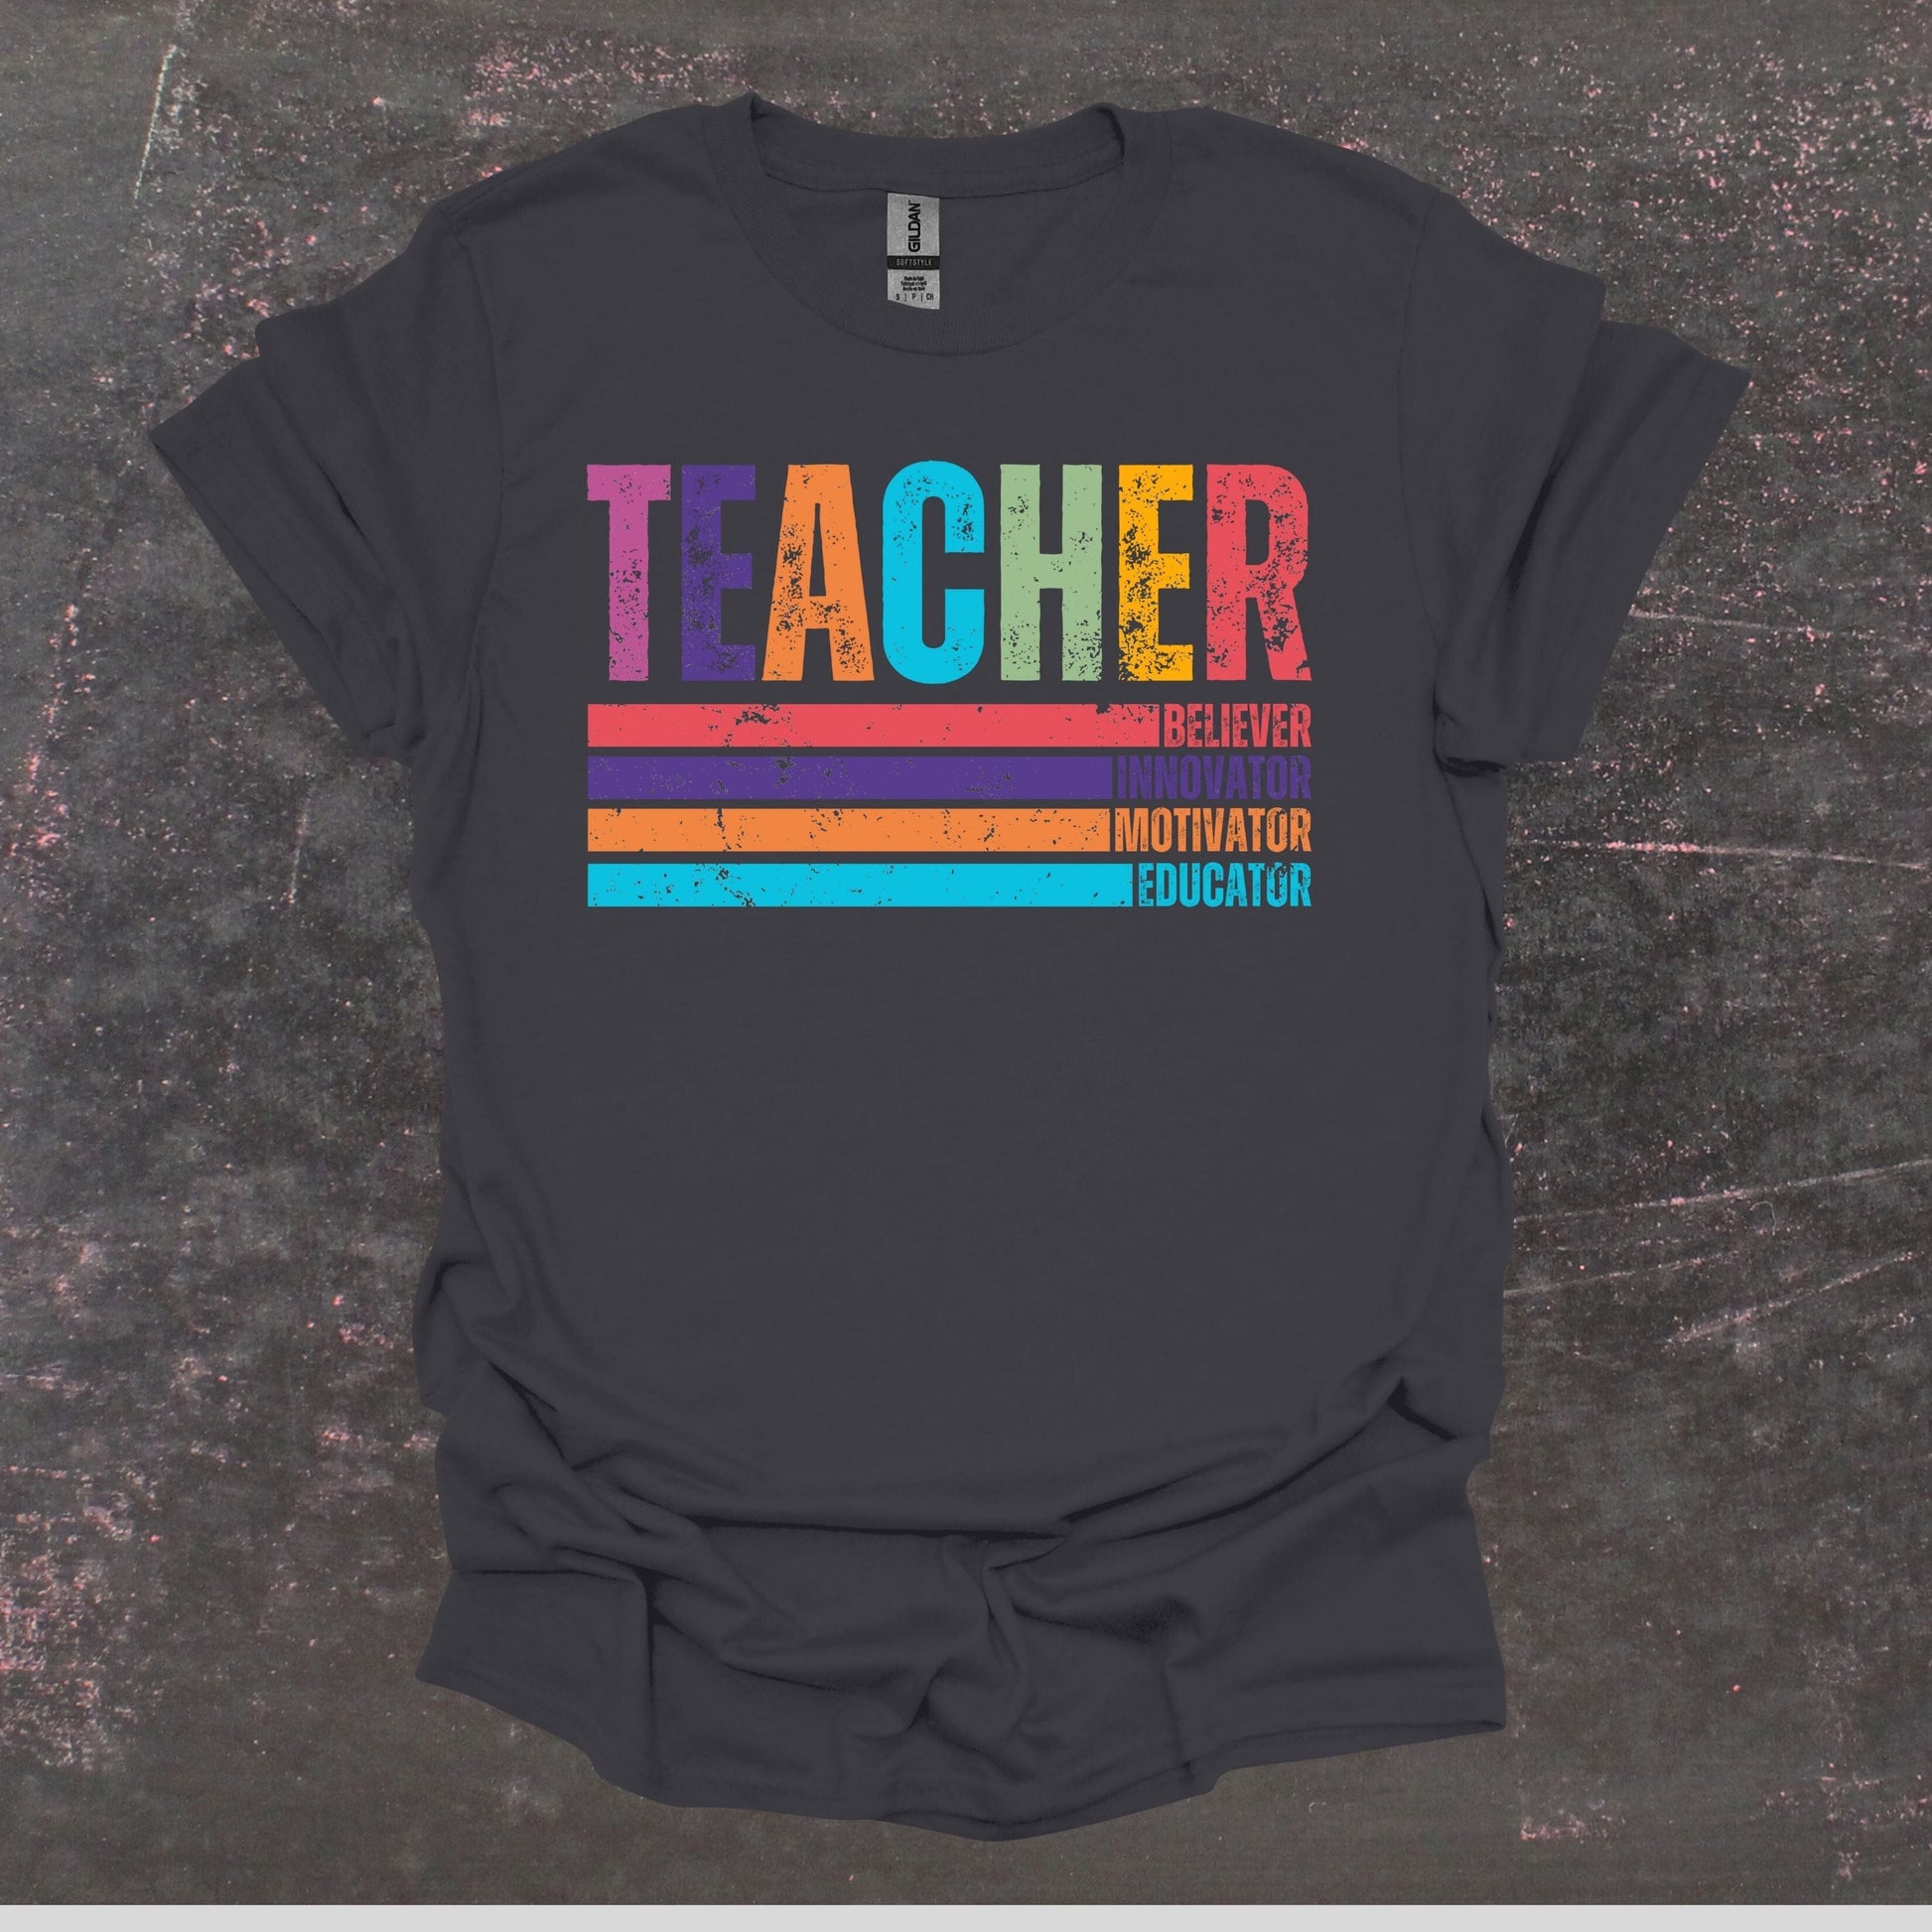 Teacher Believer Innovator Motivator Educator - Teacher T Shirt - Adult Tee Shirts T-Shirts Graphic Avenue Charcoal Adult Small 